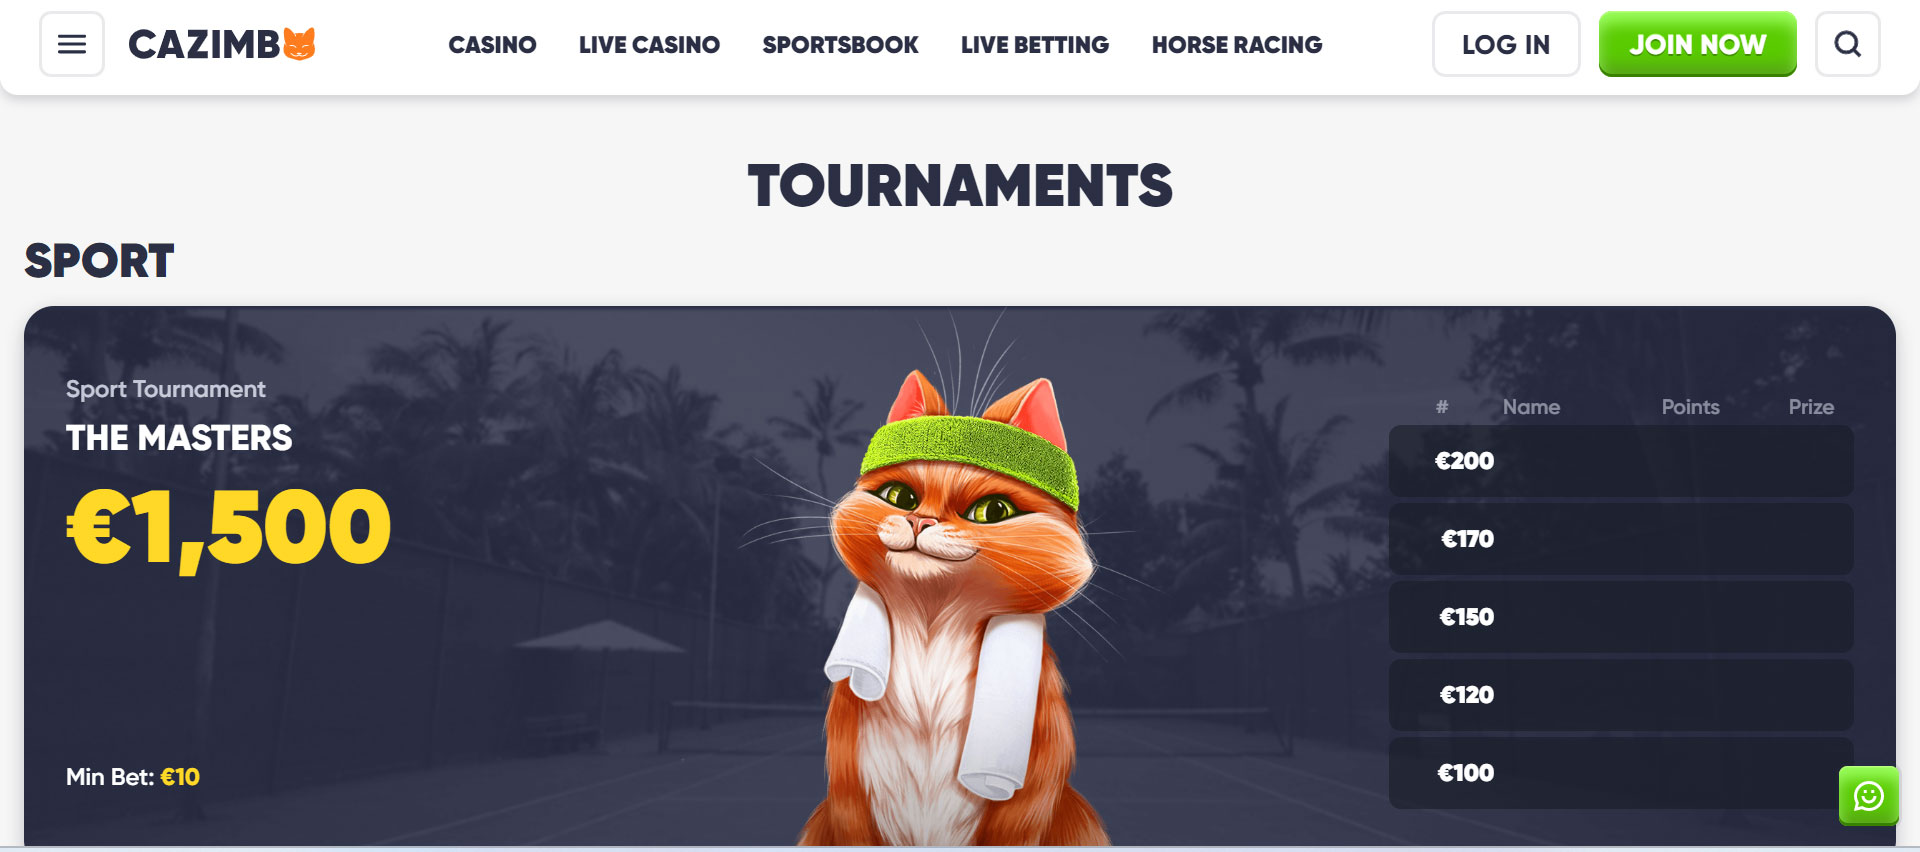 Cazimbo Casino Tournaments